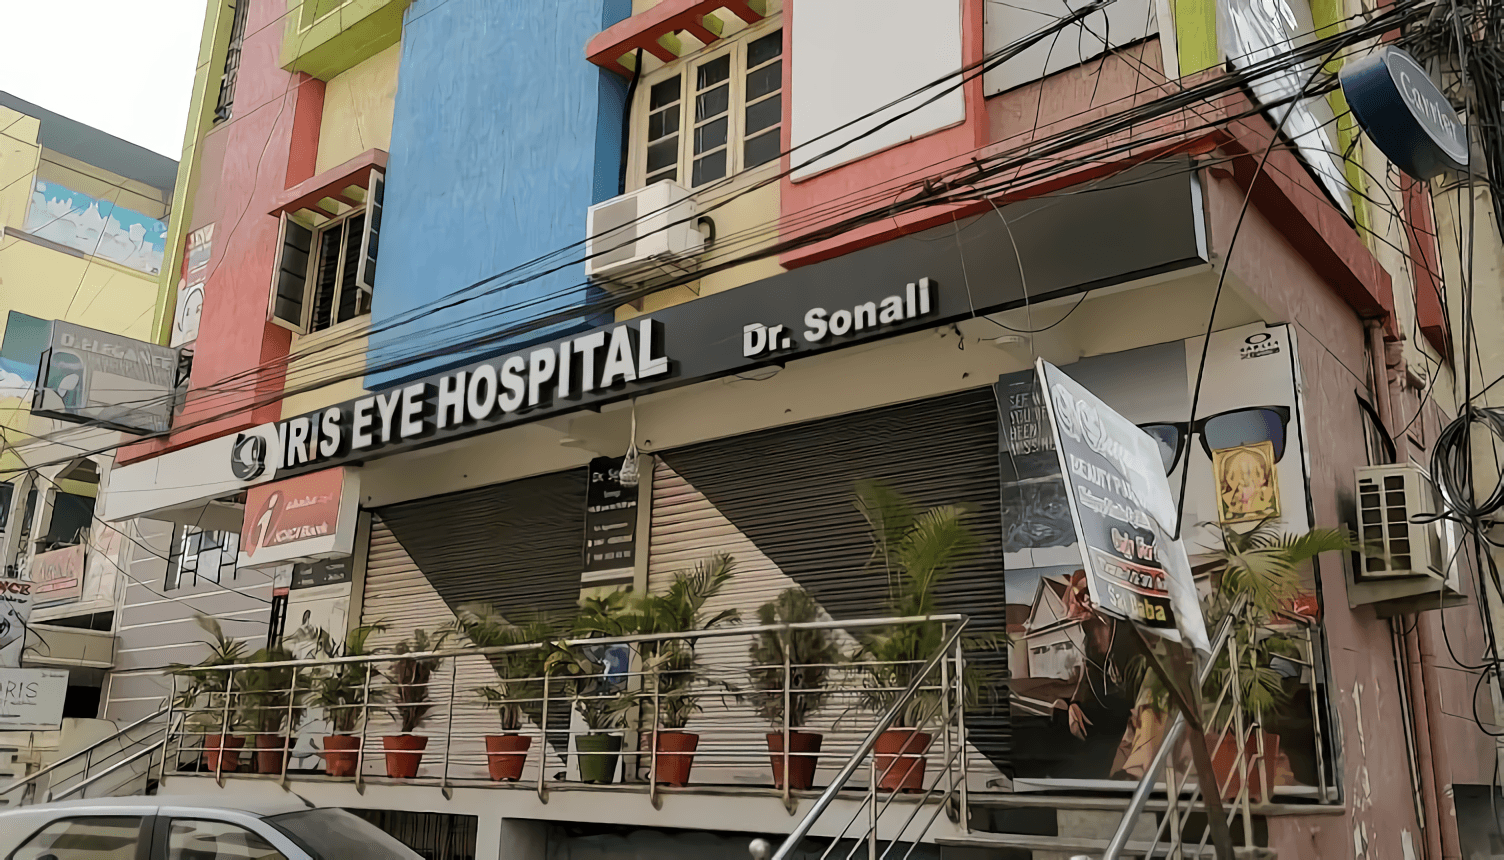 IRIS Eye Hospital